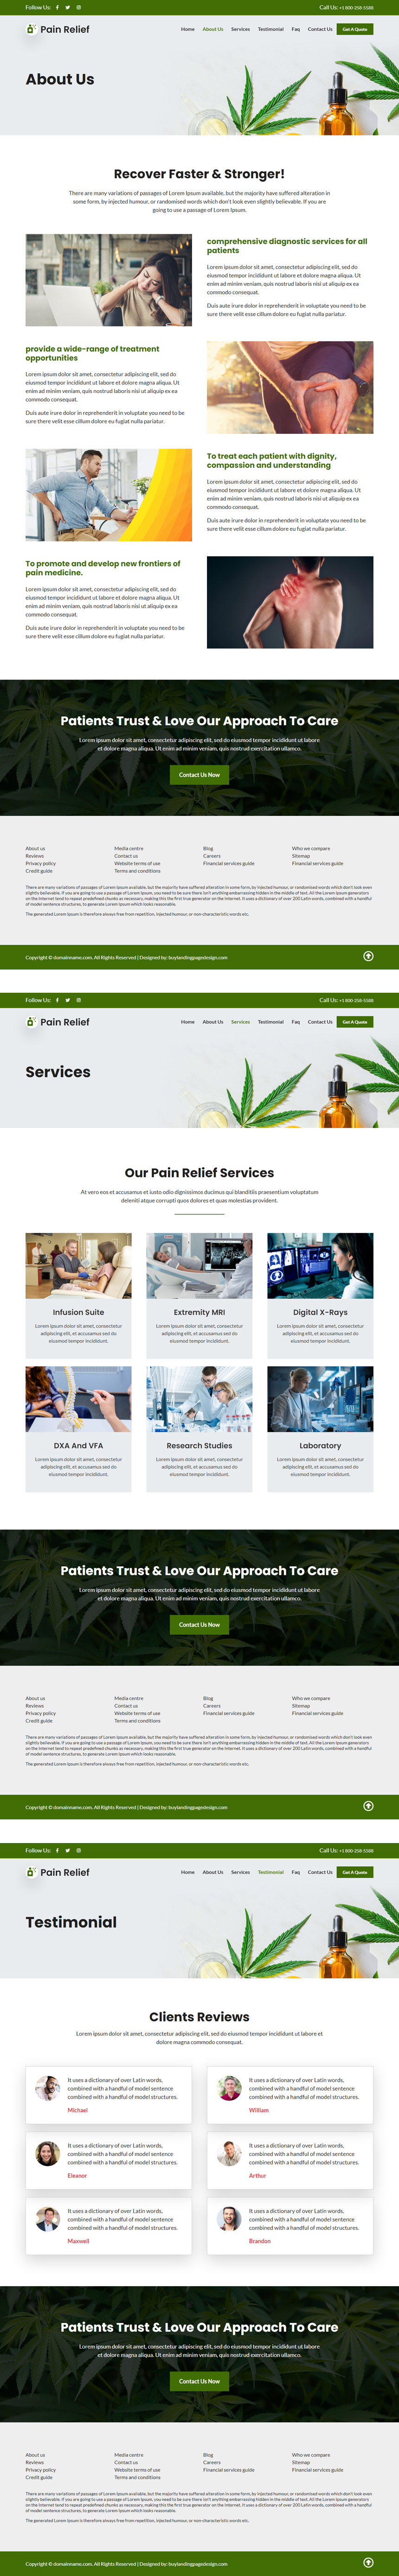 pain relief treatment responsive website design